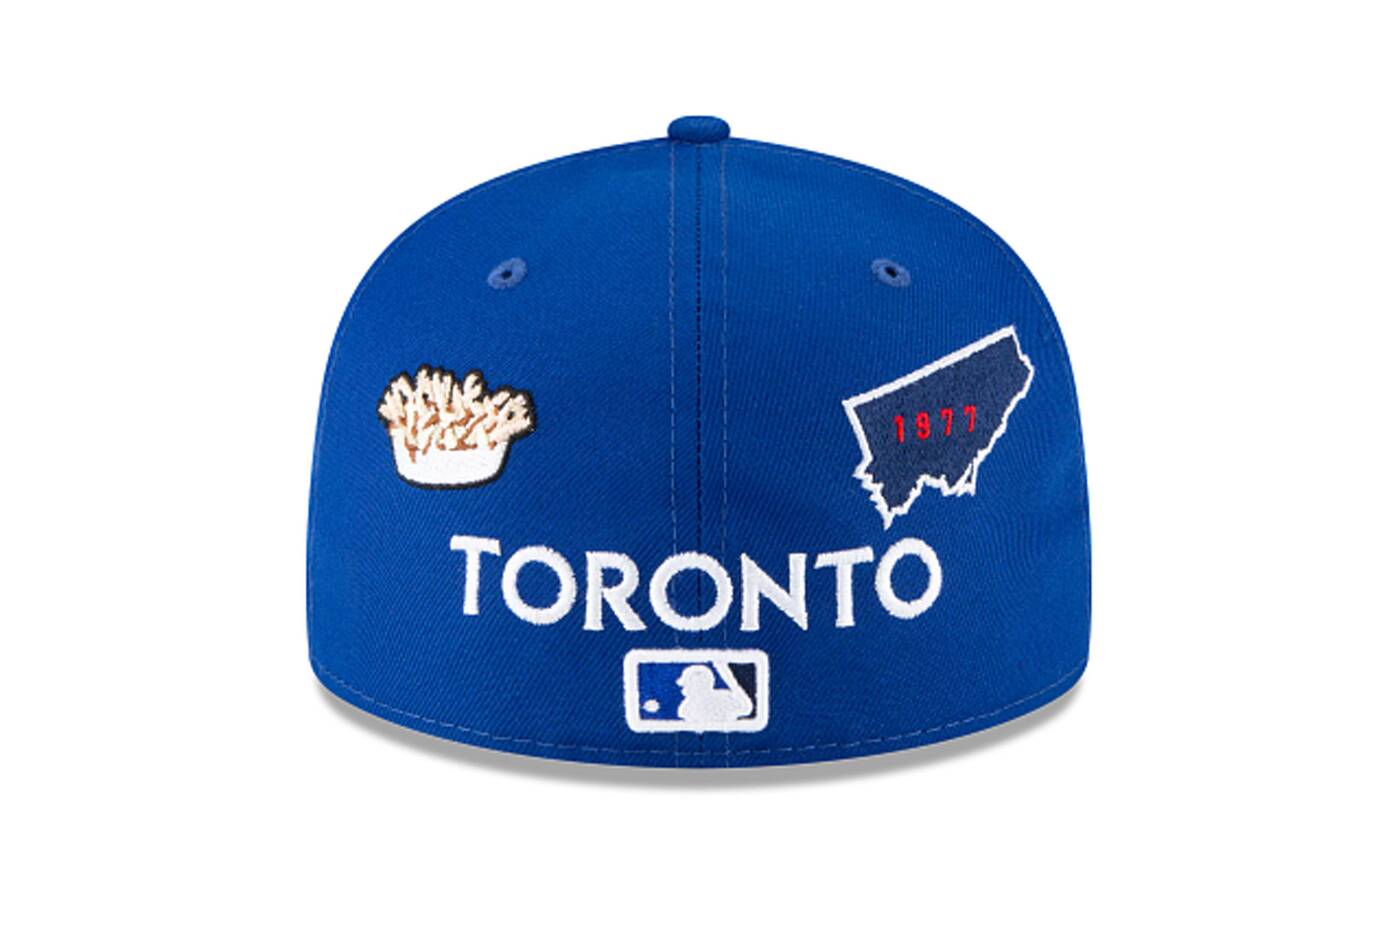 Toronto Blue Jays cap